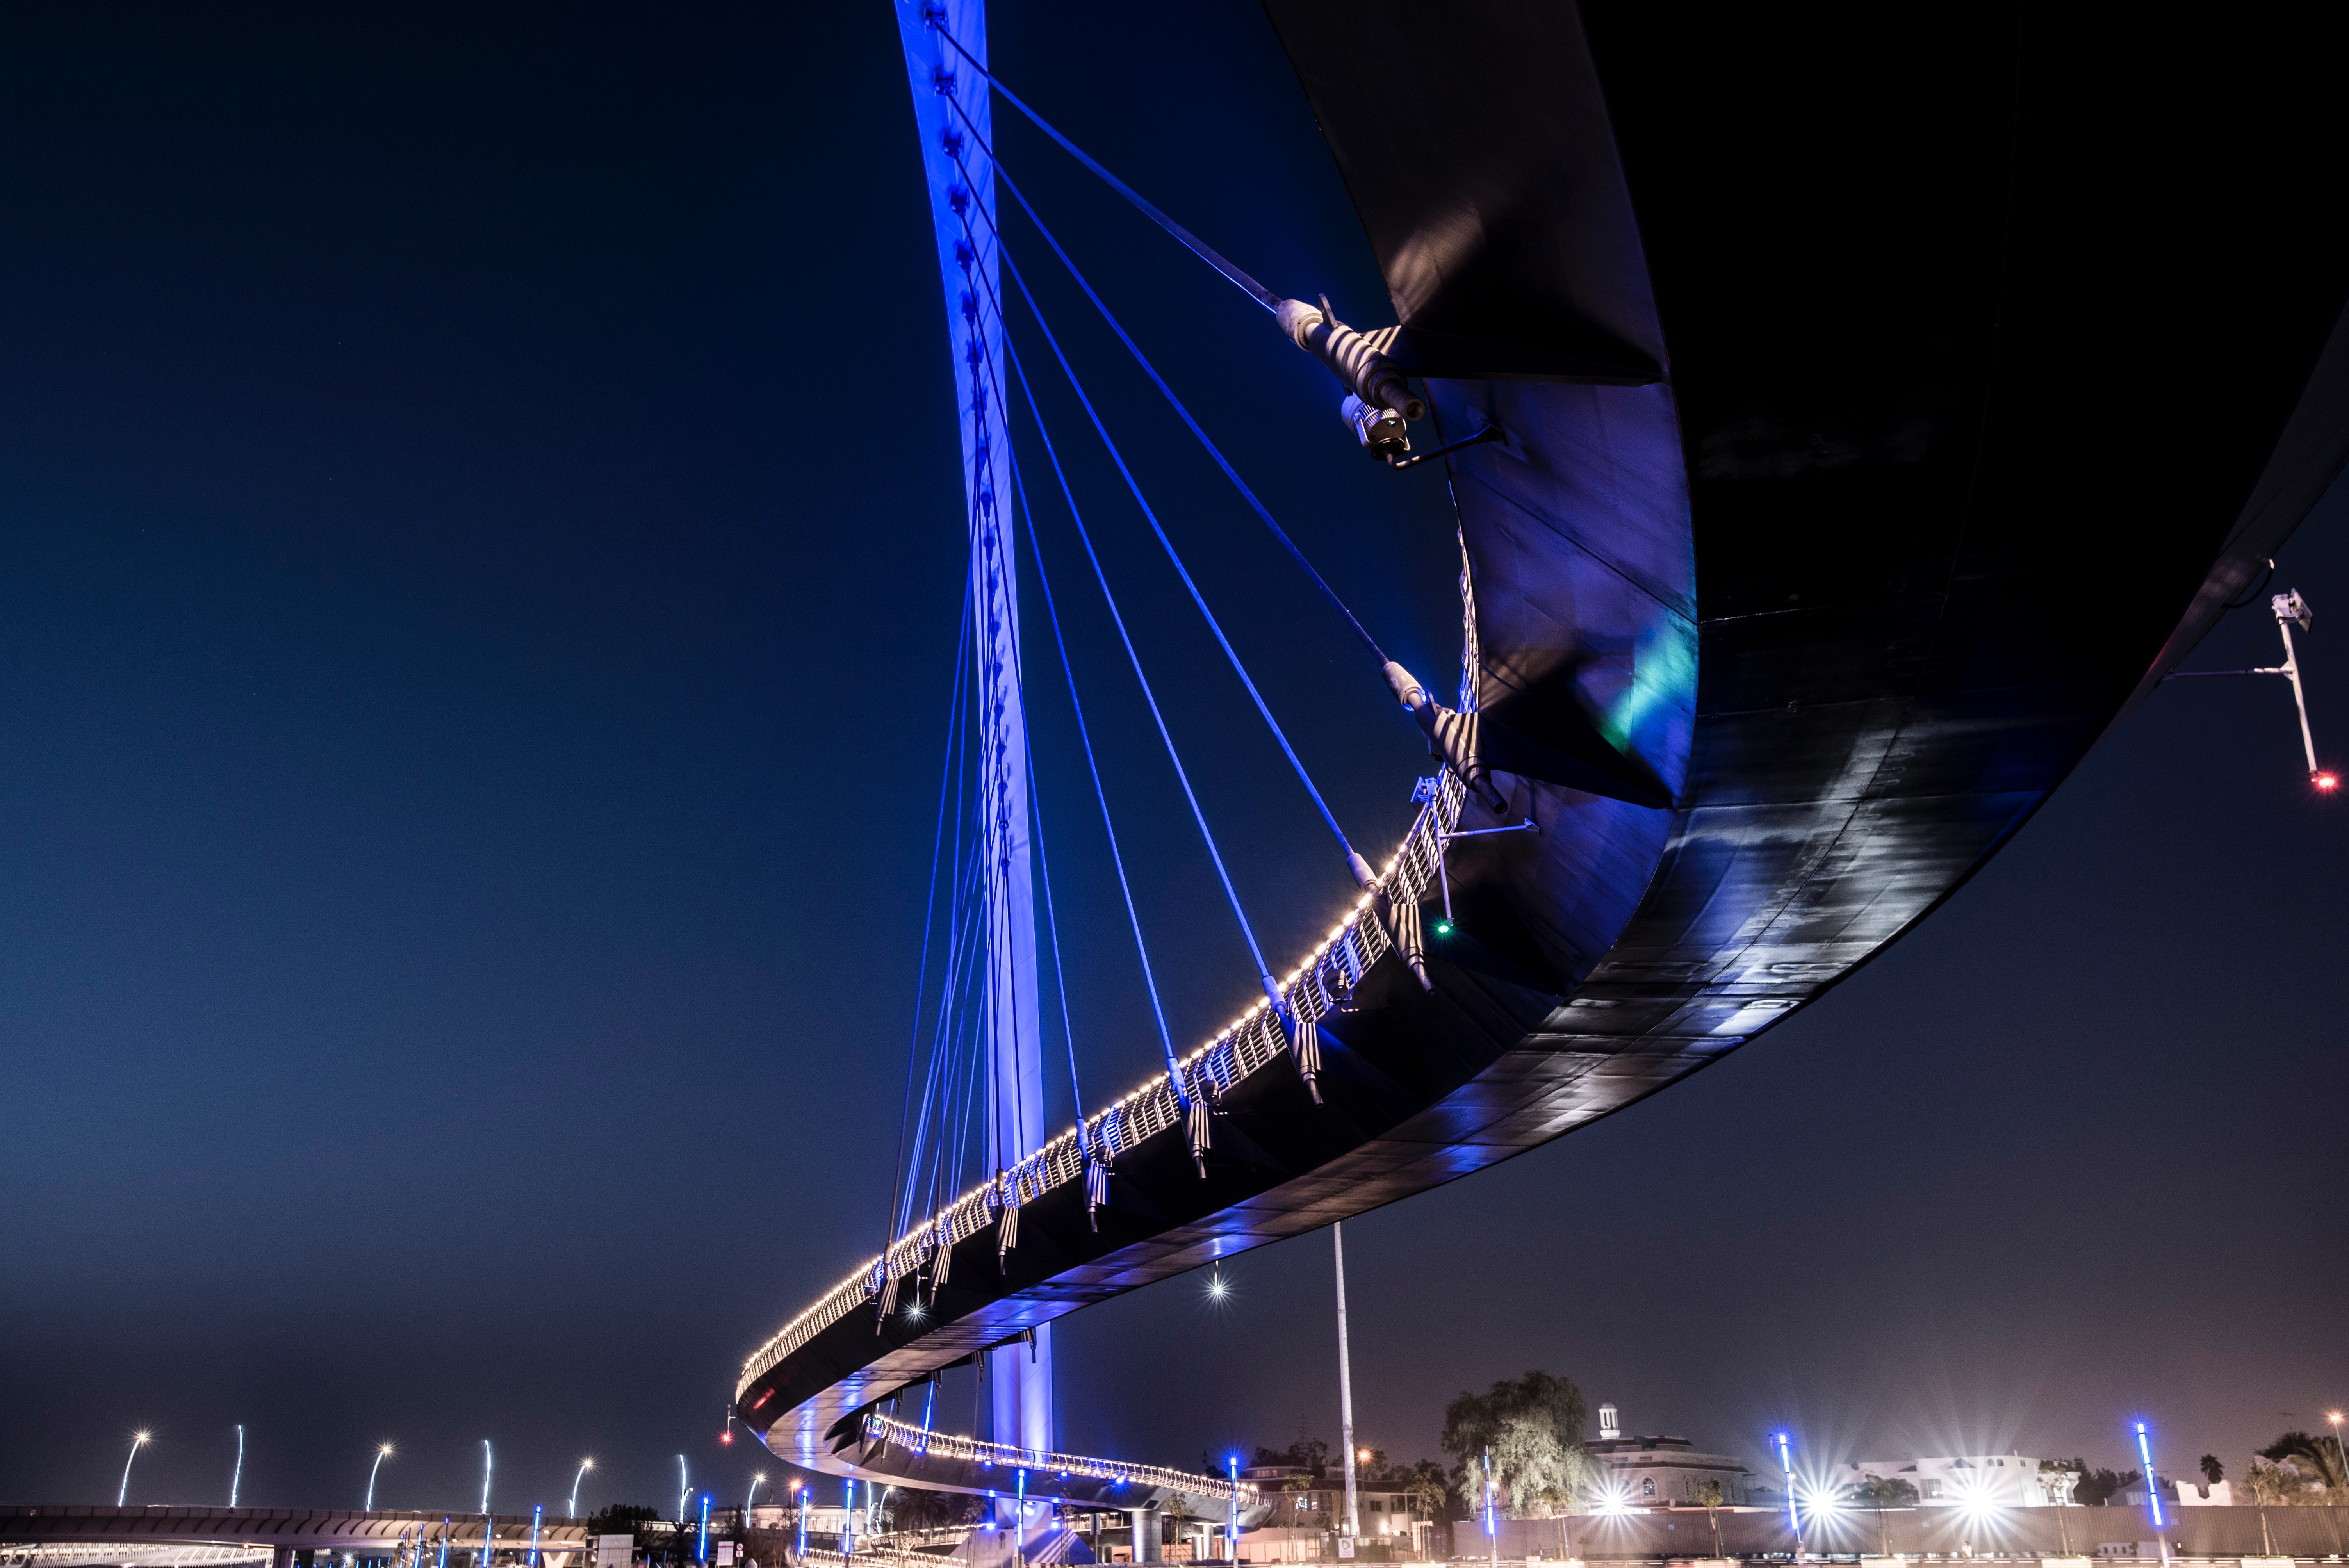 City View during Night, Architecture, Travel, Transportation system, Suspension bridge, HQ Photo